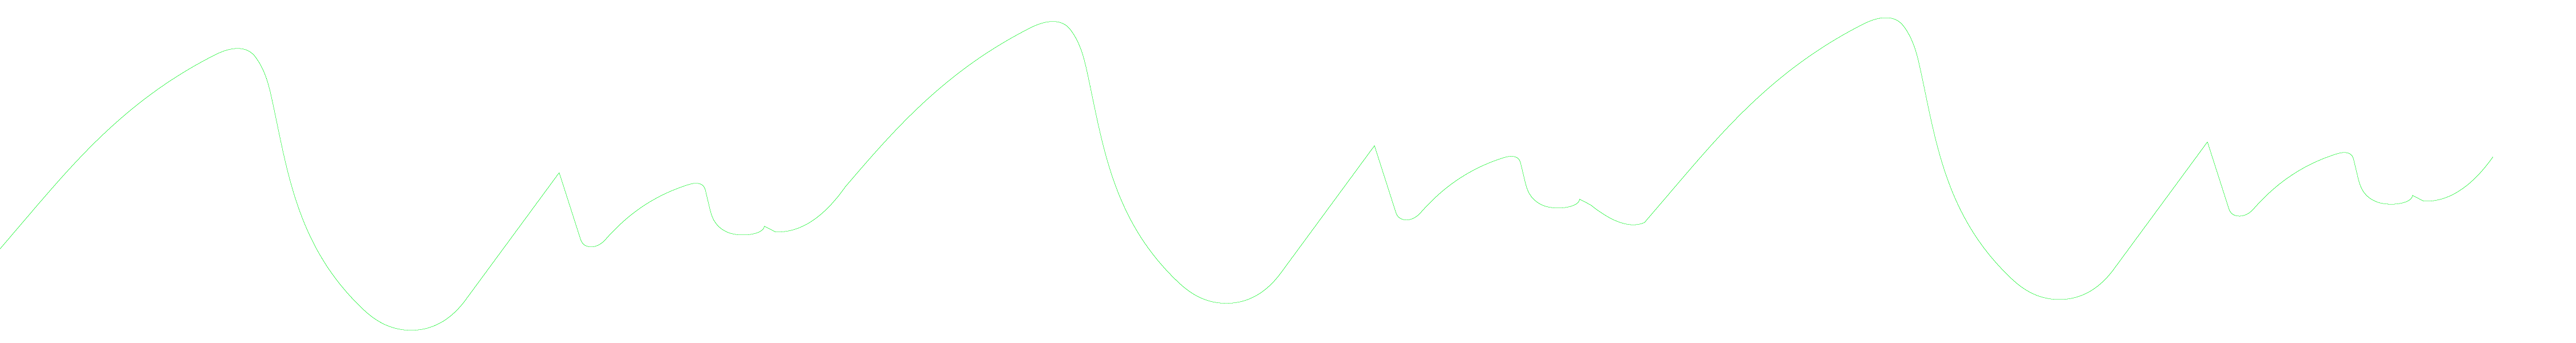 linea-curva01